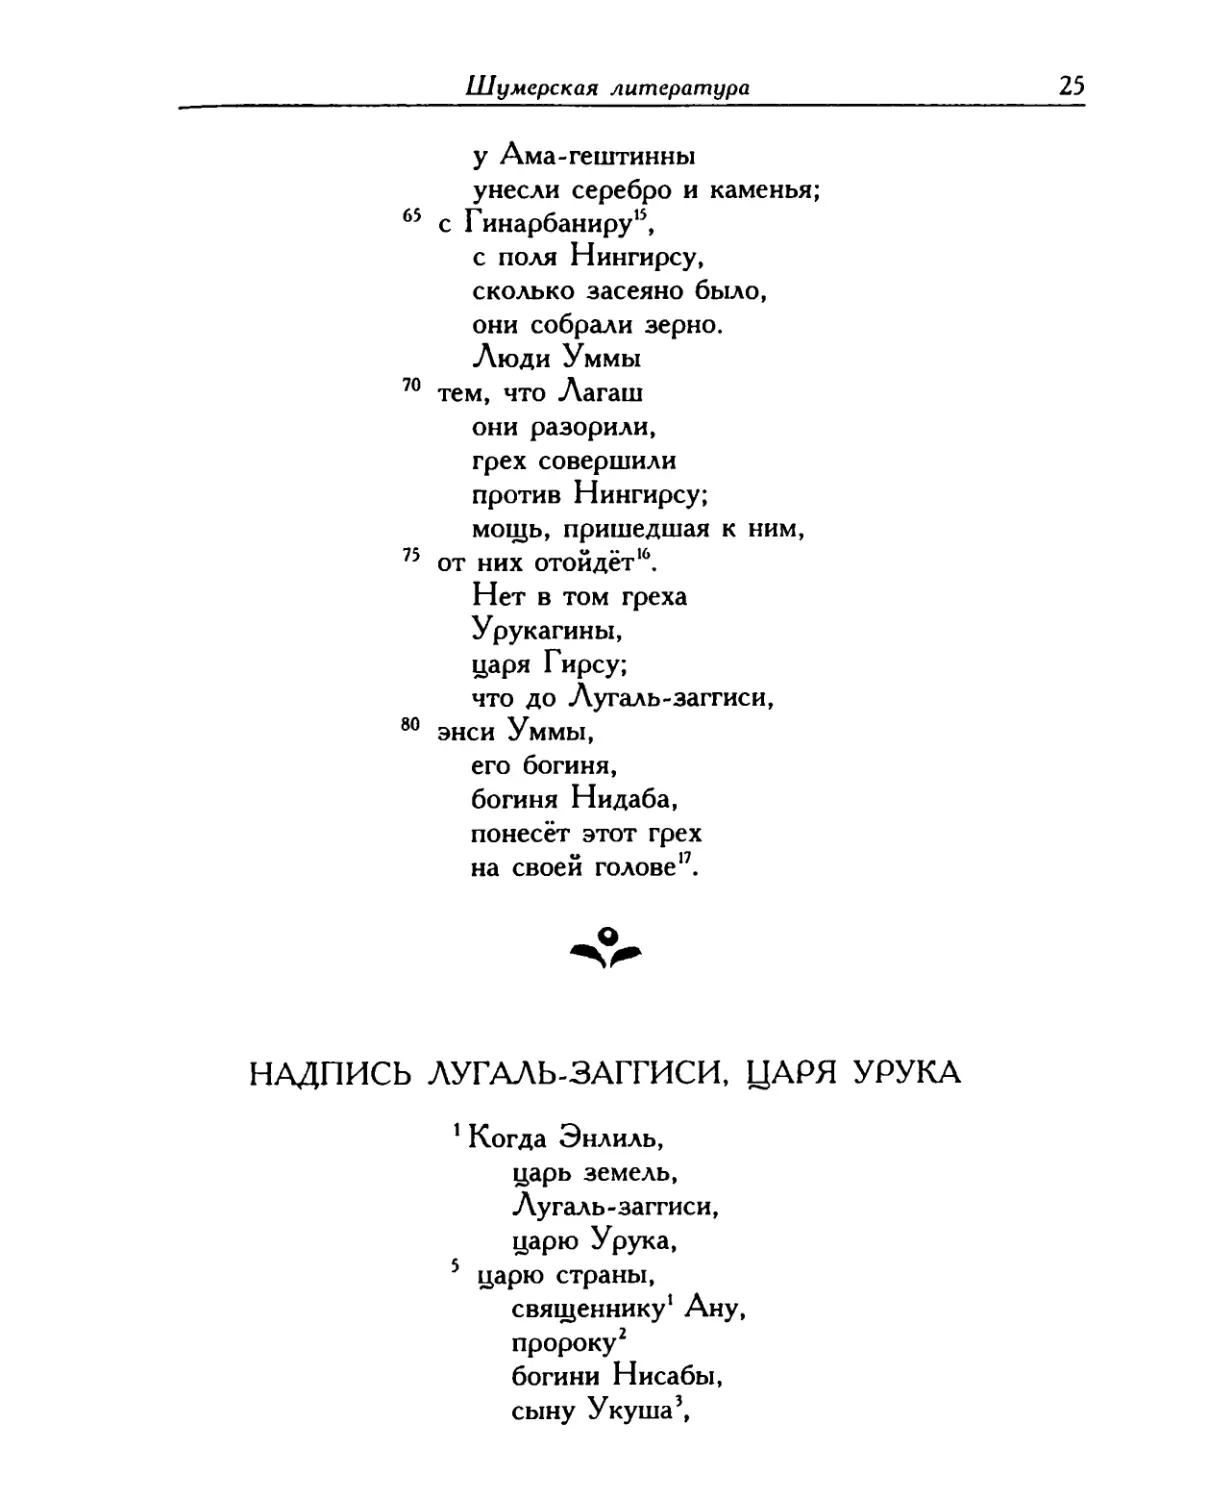 Надпись Лугаль-заггиси, царя Урука